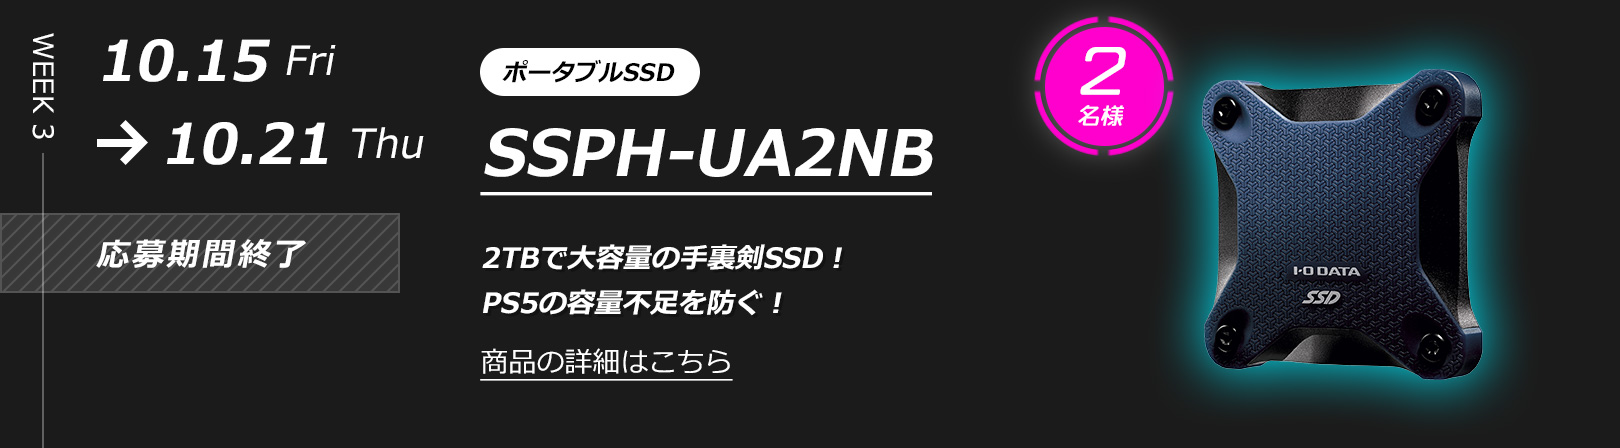 WEEK 3: ポータブルSSD SSPH-UA2NB